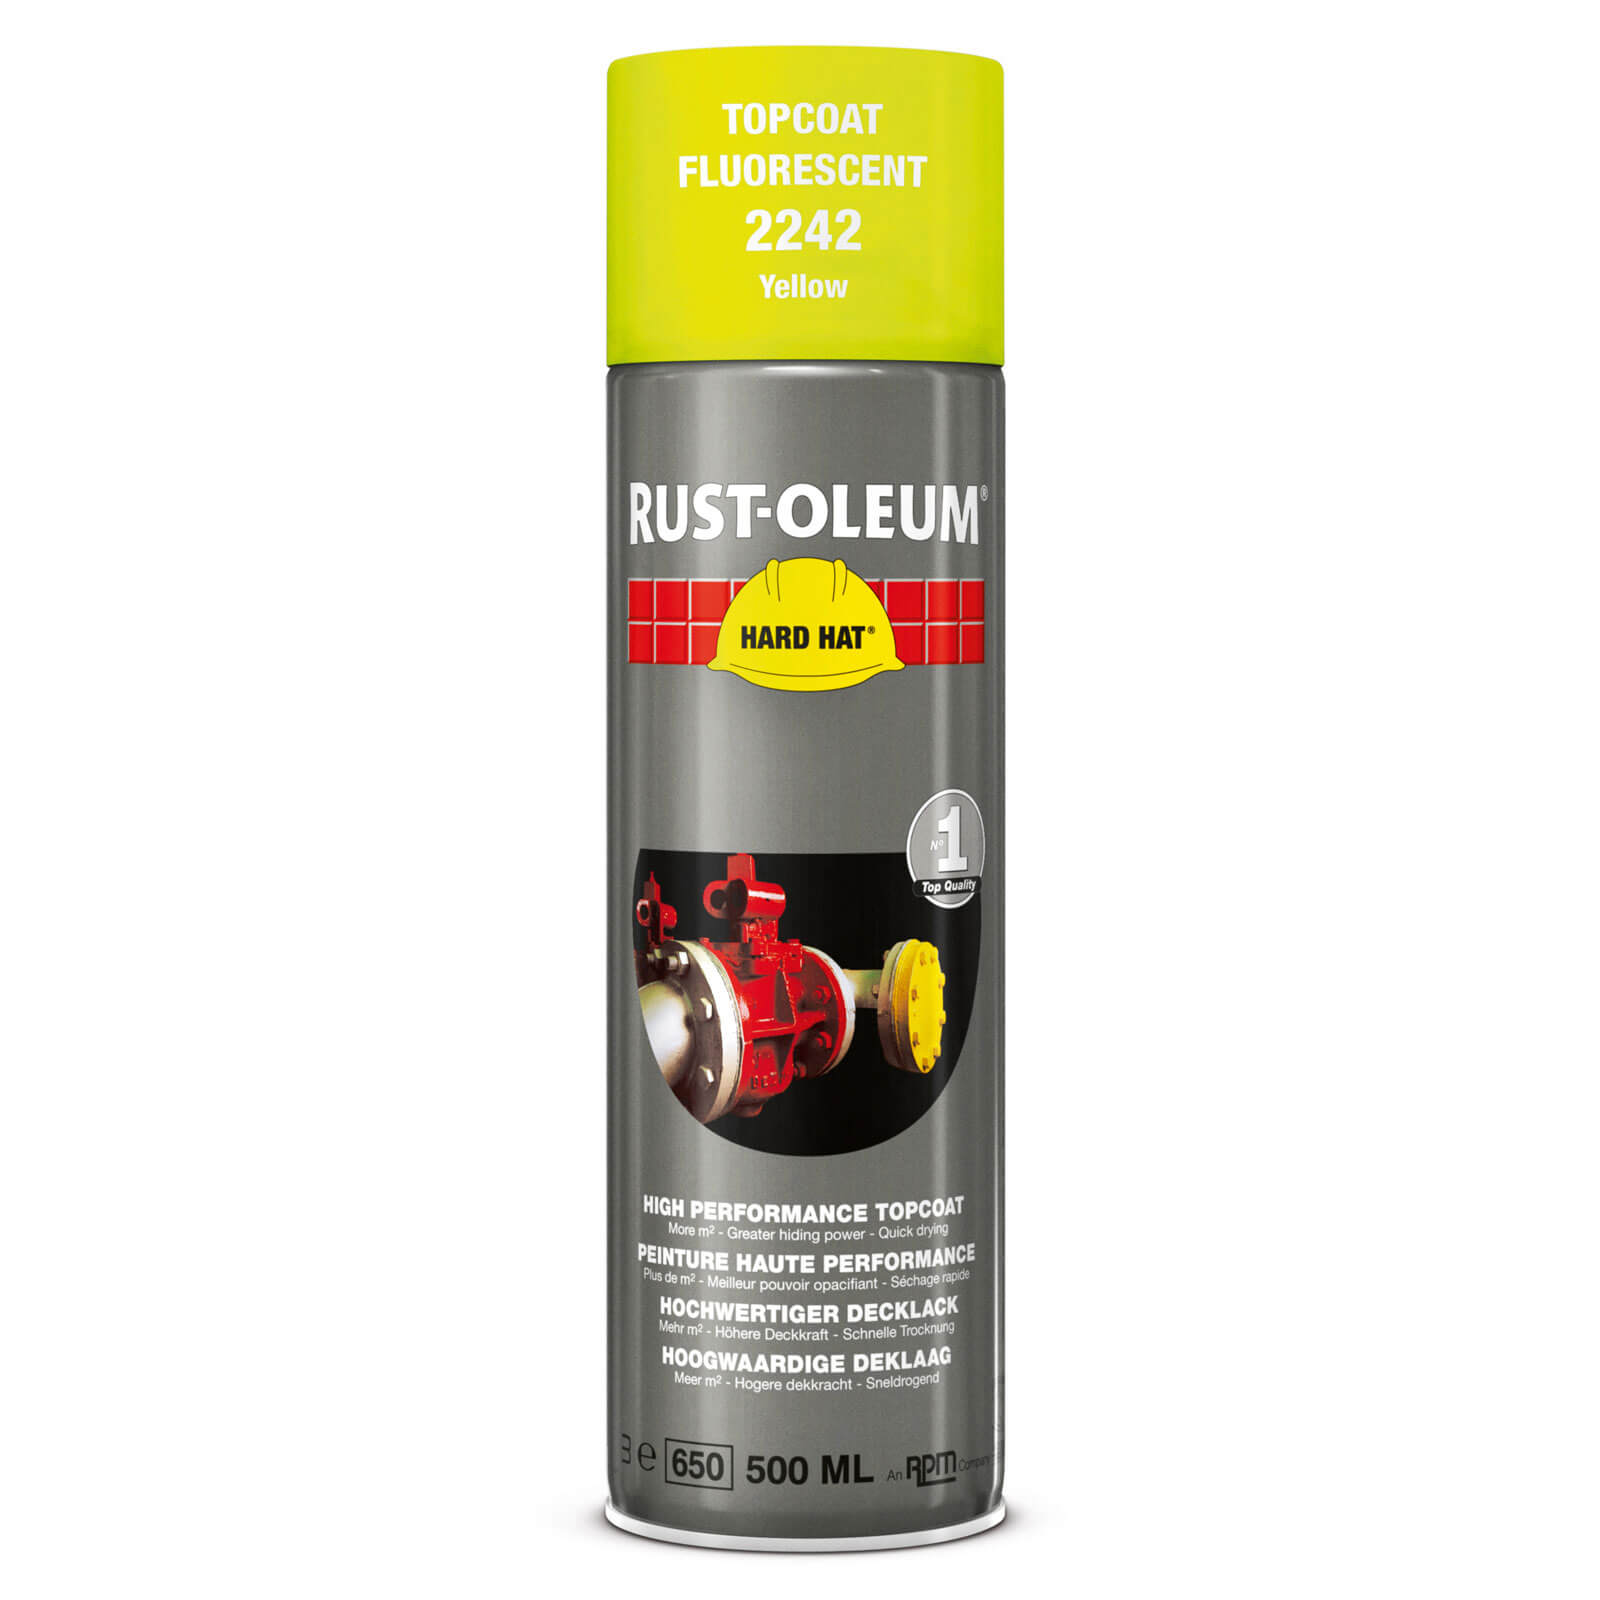 Image of Rust Oleum Hard Hat Fluorescent Spray Paint Yellow 500ml